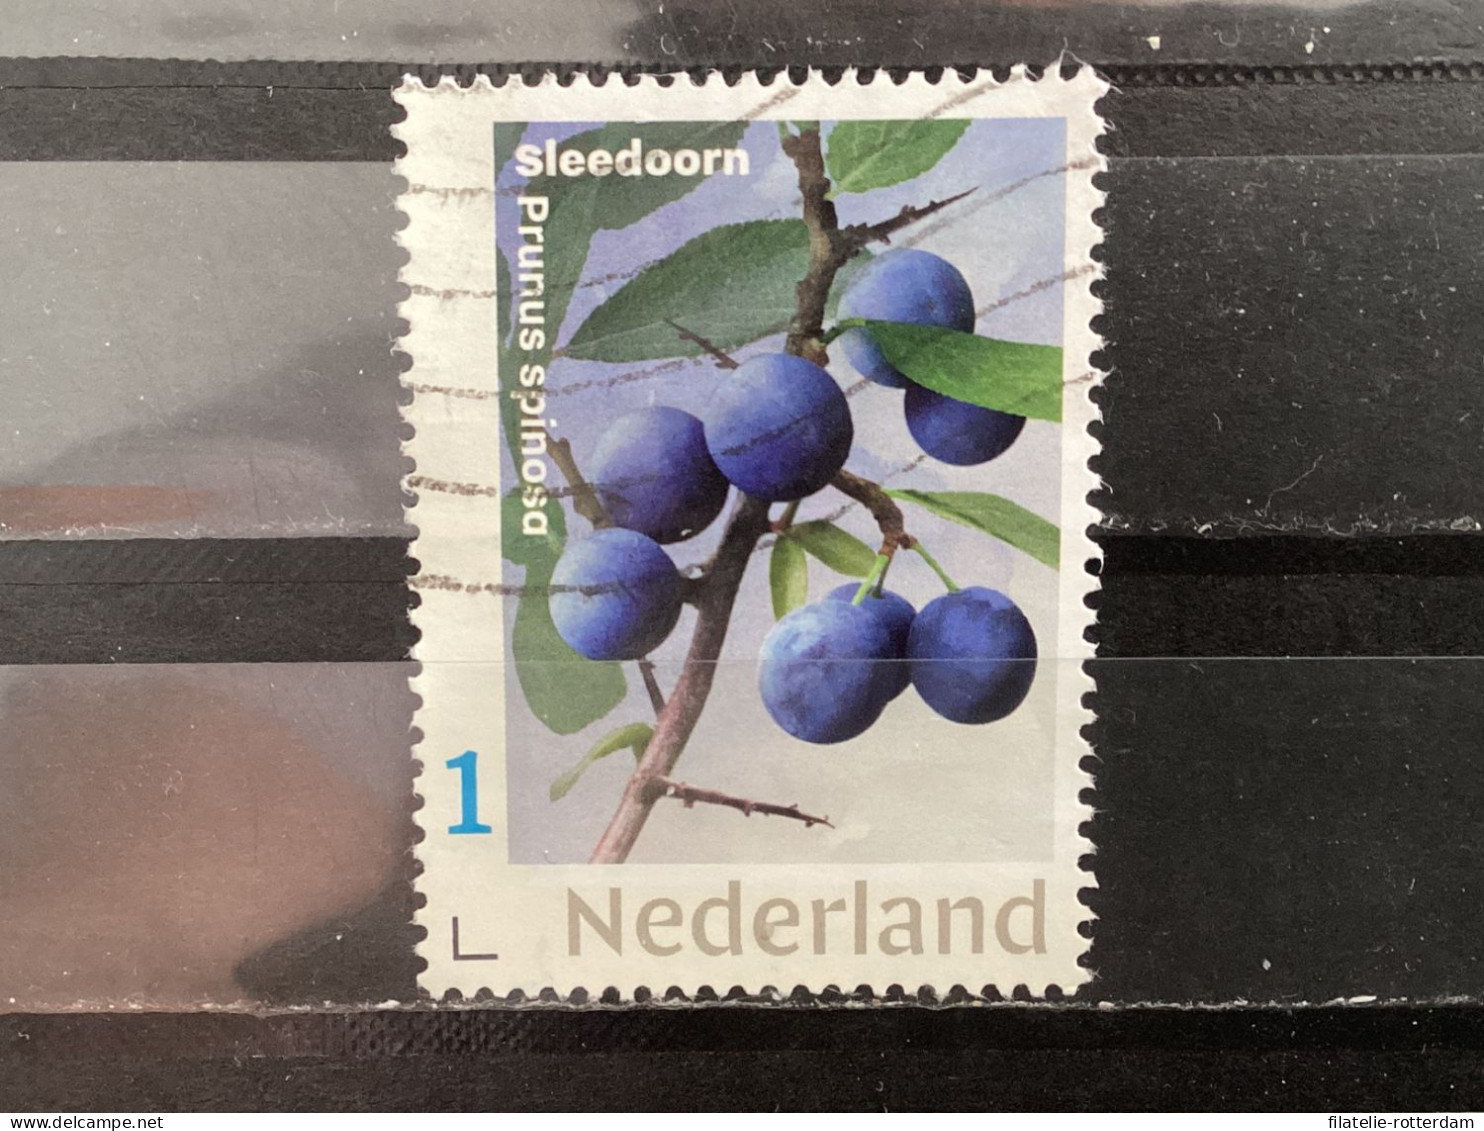 The Netherlands / Nederland - Fruit, Sleedoorn 2021 - Gebraucht